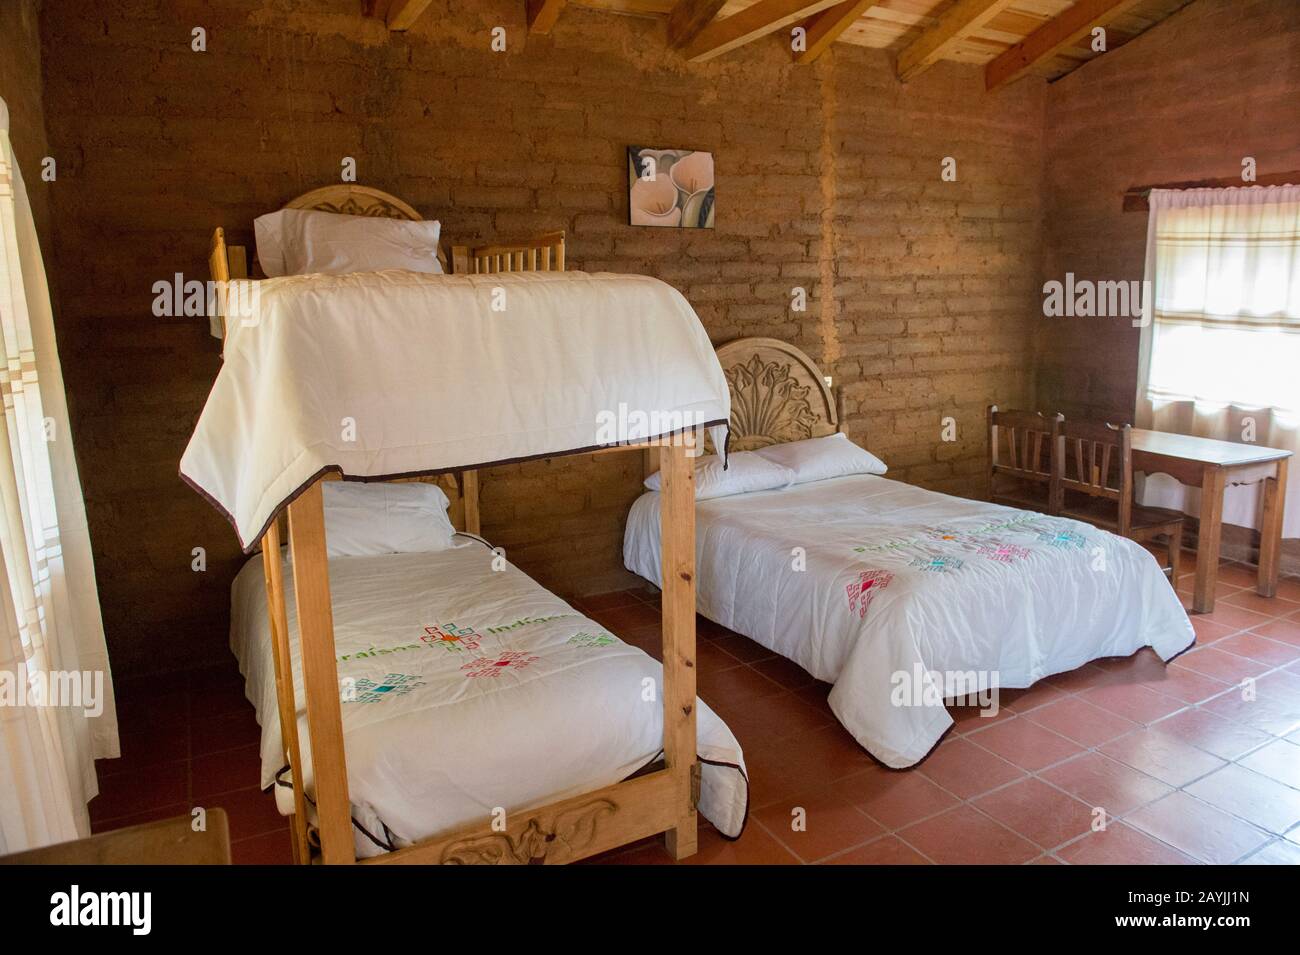 The interior of a cabin at the ecotourism lodge San Pablo Cuatro Venados near Oaxaca, Mexico. Stock Photo